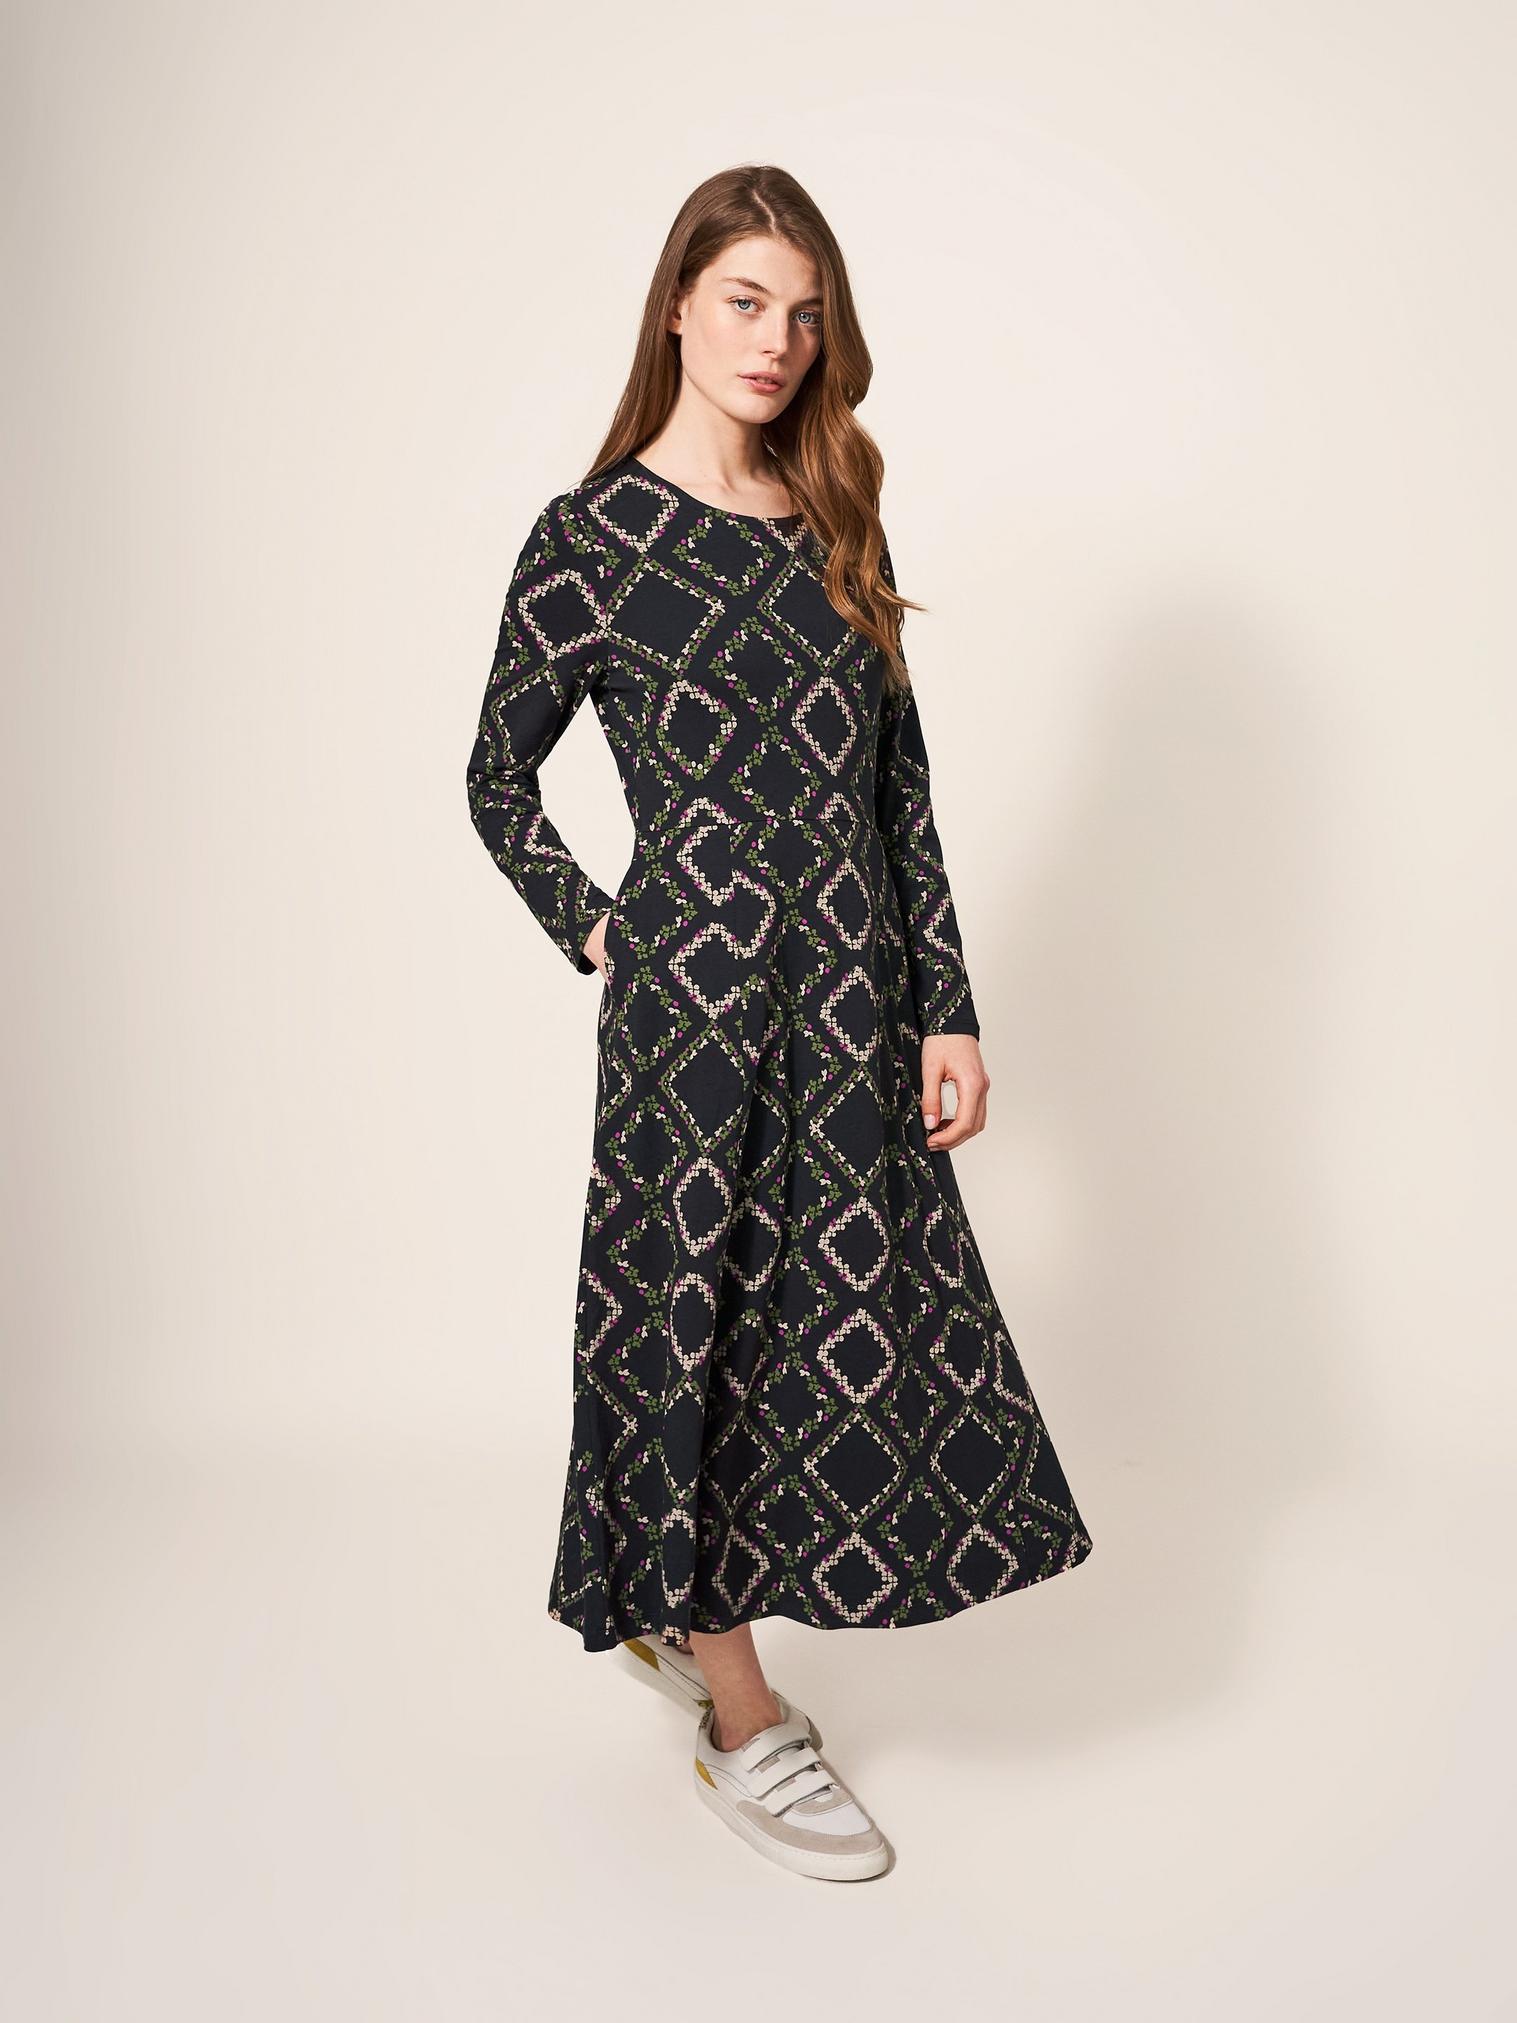 Madeline Classic Jersey Dress in BLK MLT - MODEL DETAIL